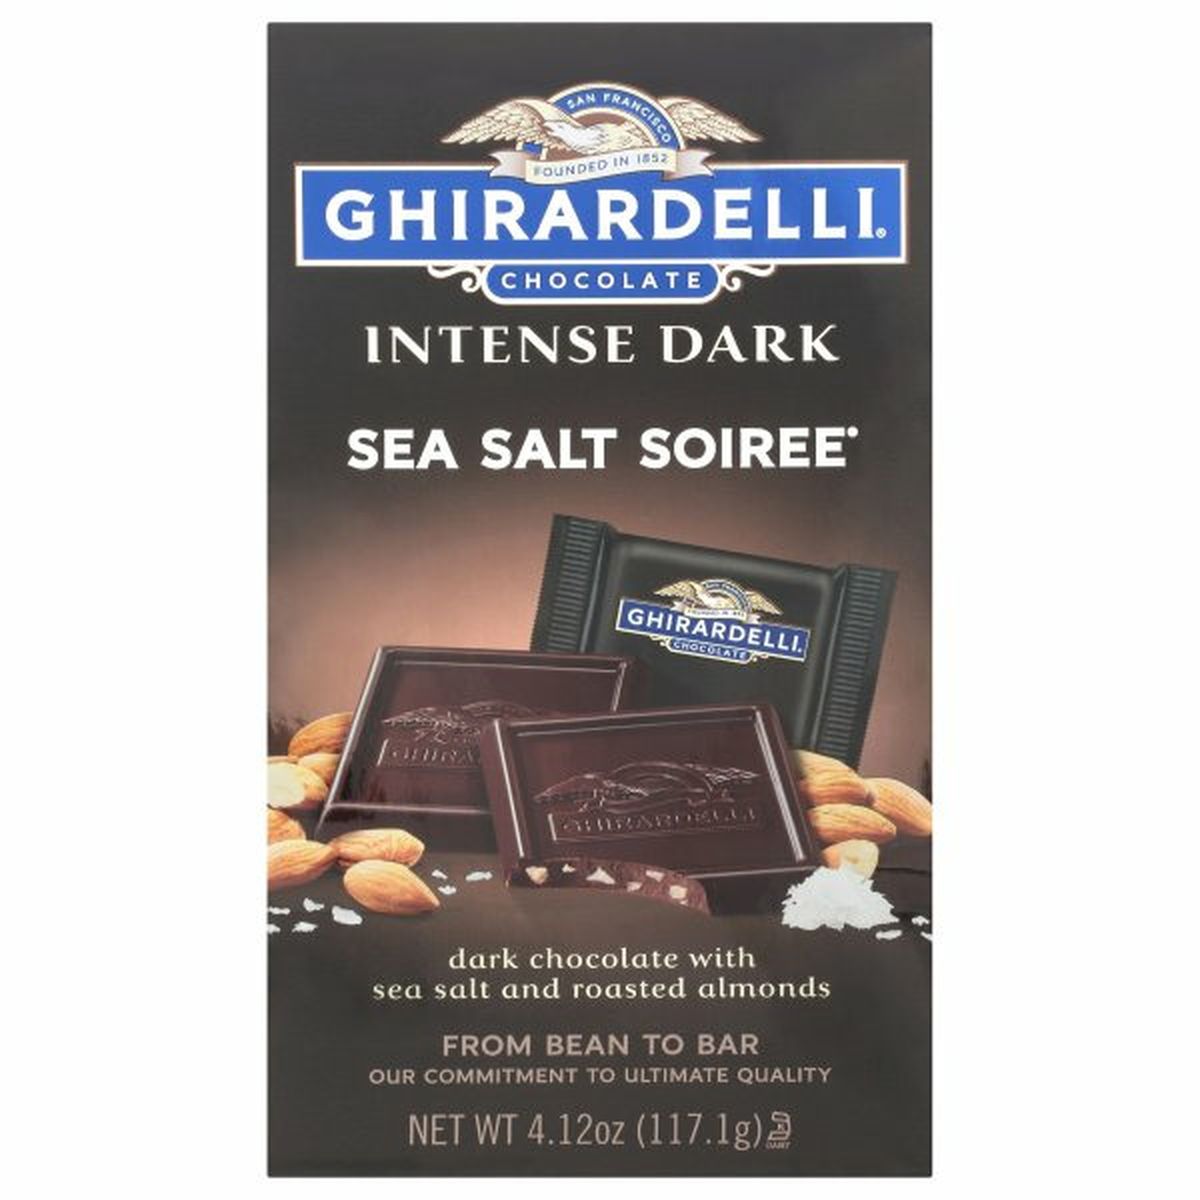 Calories in Ghirardelli Dark Chocolate, Intense, Sea Salt Soiree